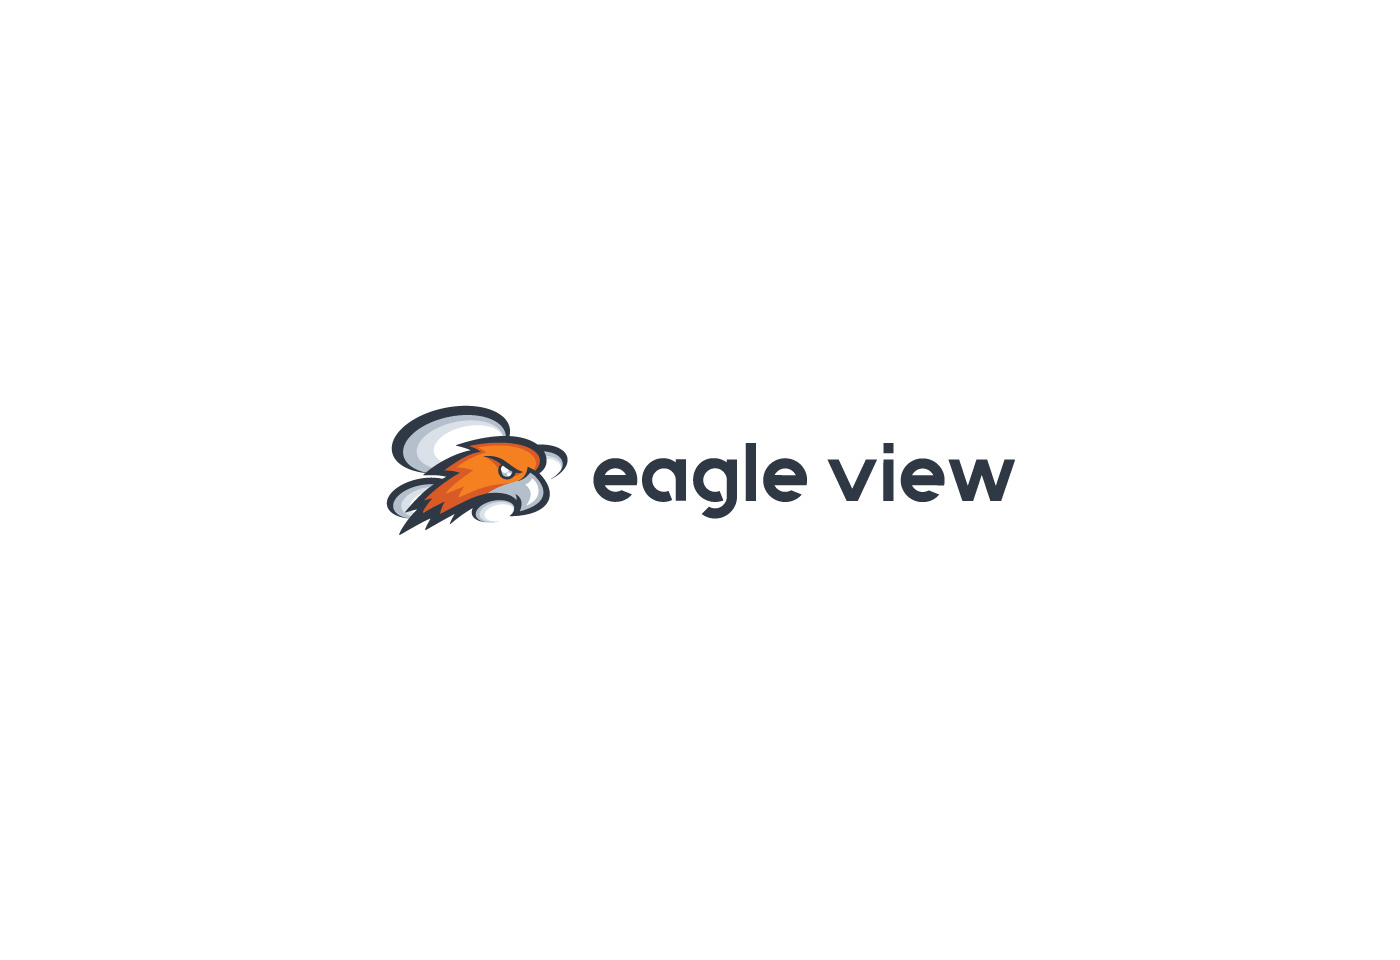 marca eagle view - versão horizontal